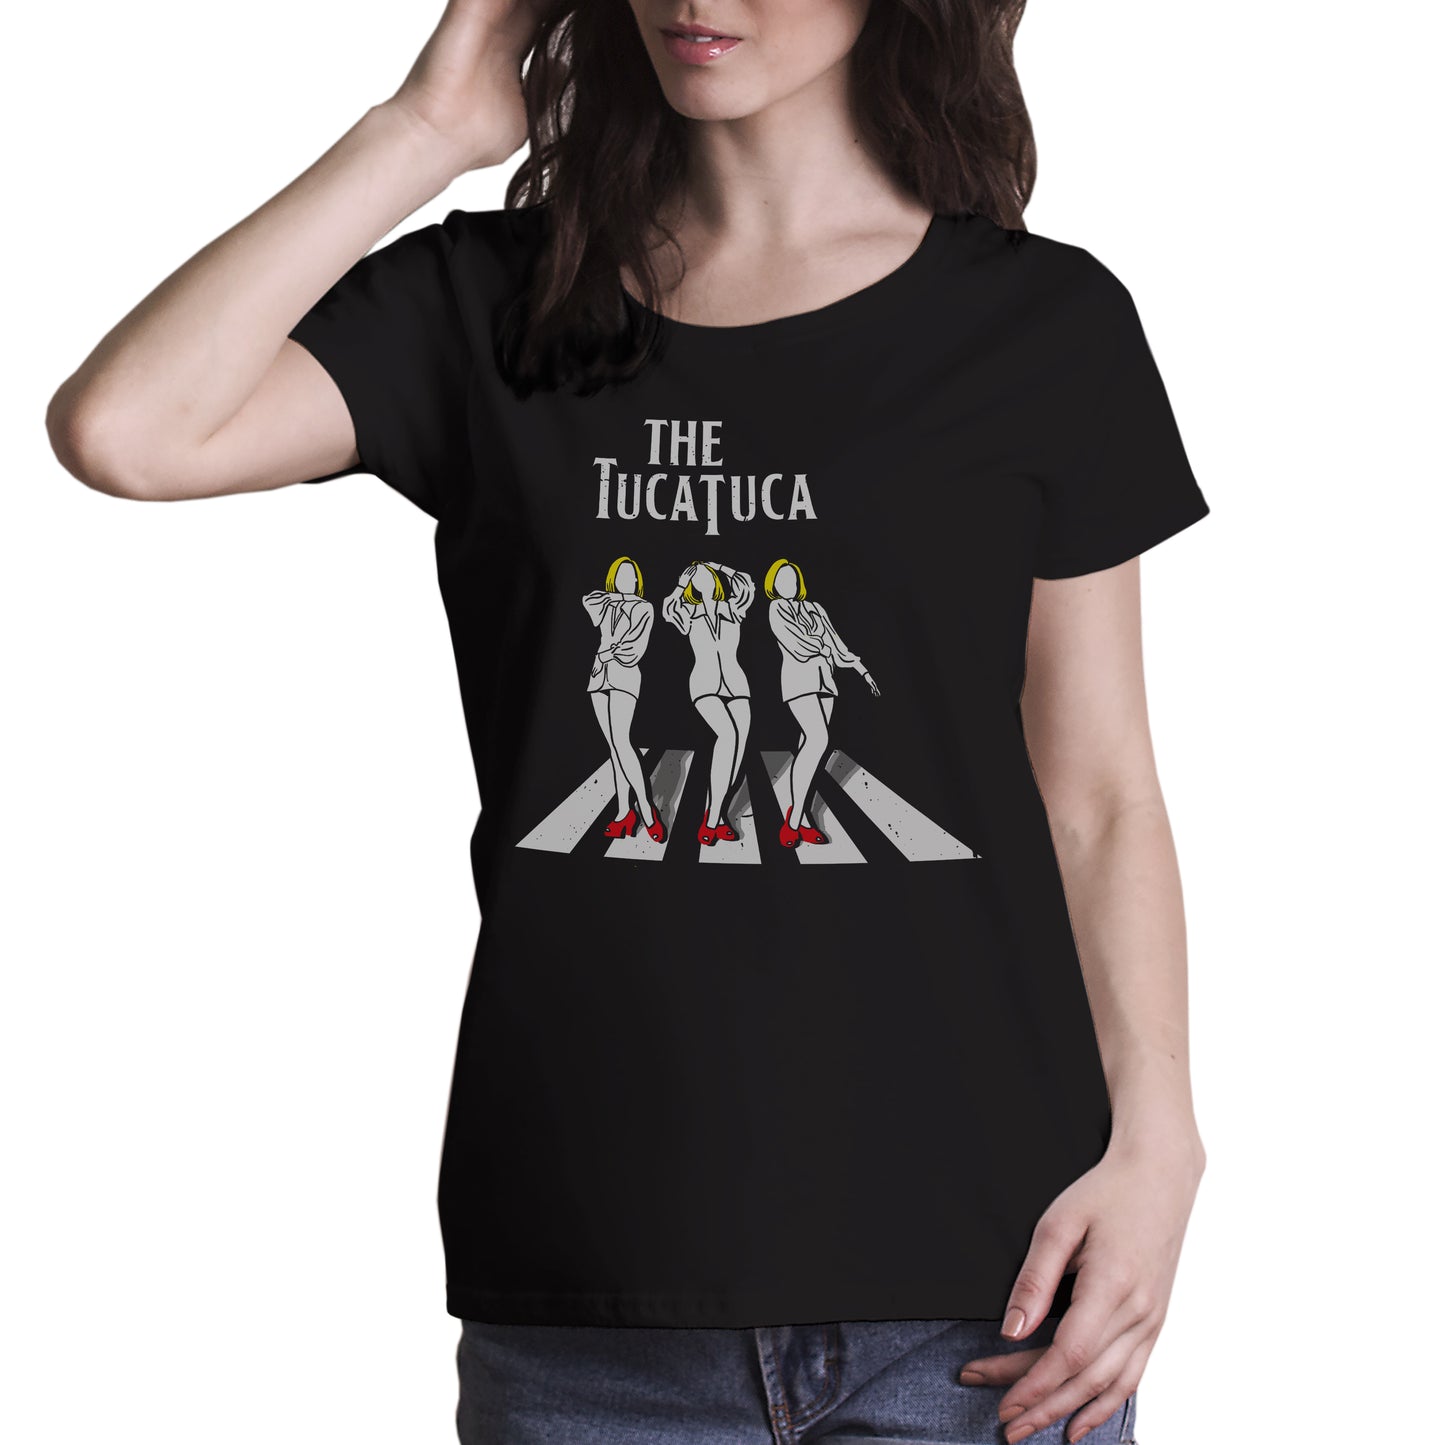 T-Shirt Divertente Tuca Tuca Like Beatles - Raffa nazionale - Trash - Music - Choose ur color - CUC chooseurcolor